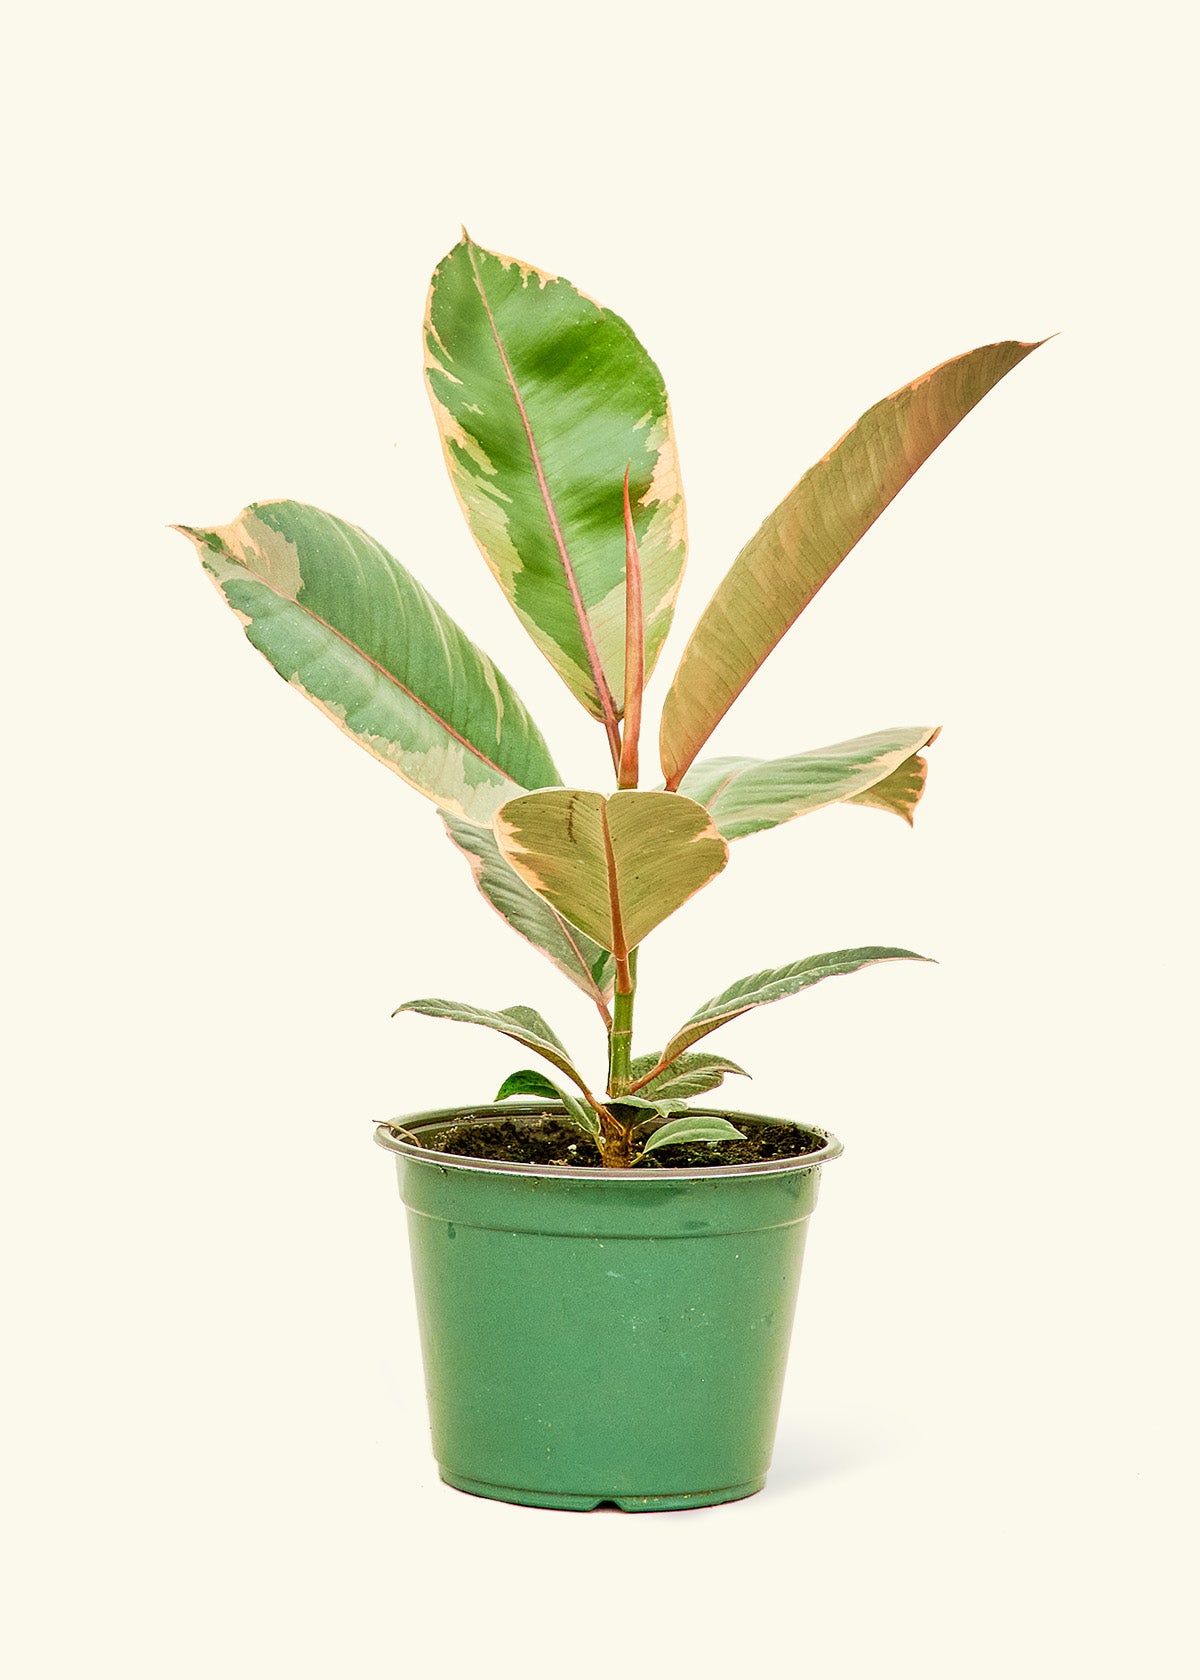 Medium Ficus 'Tineke' (Ficus elastica 'Tineke') in grow pot